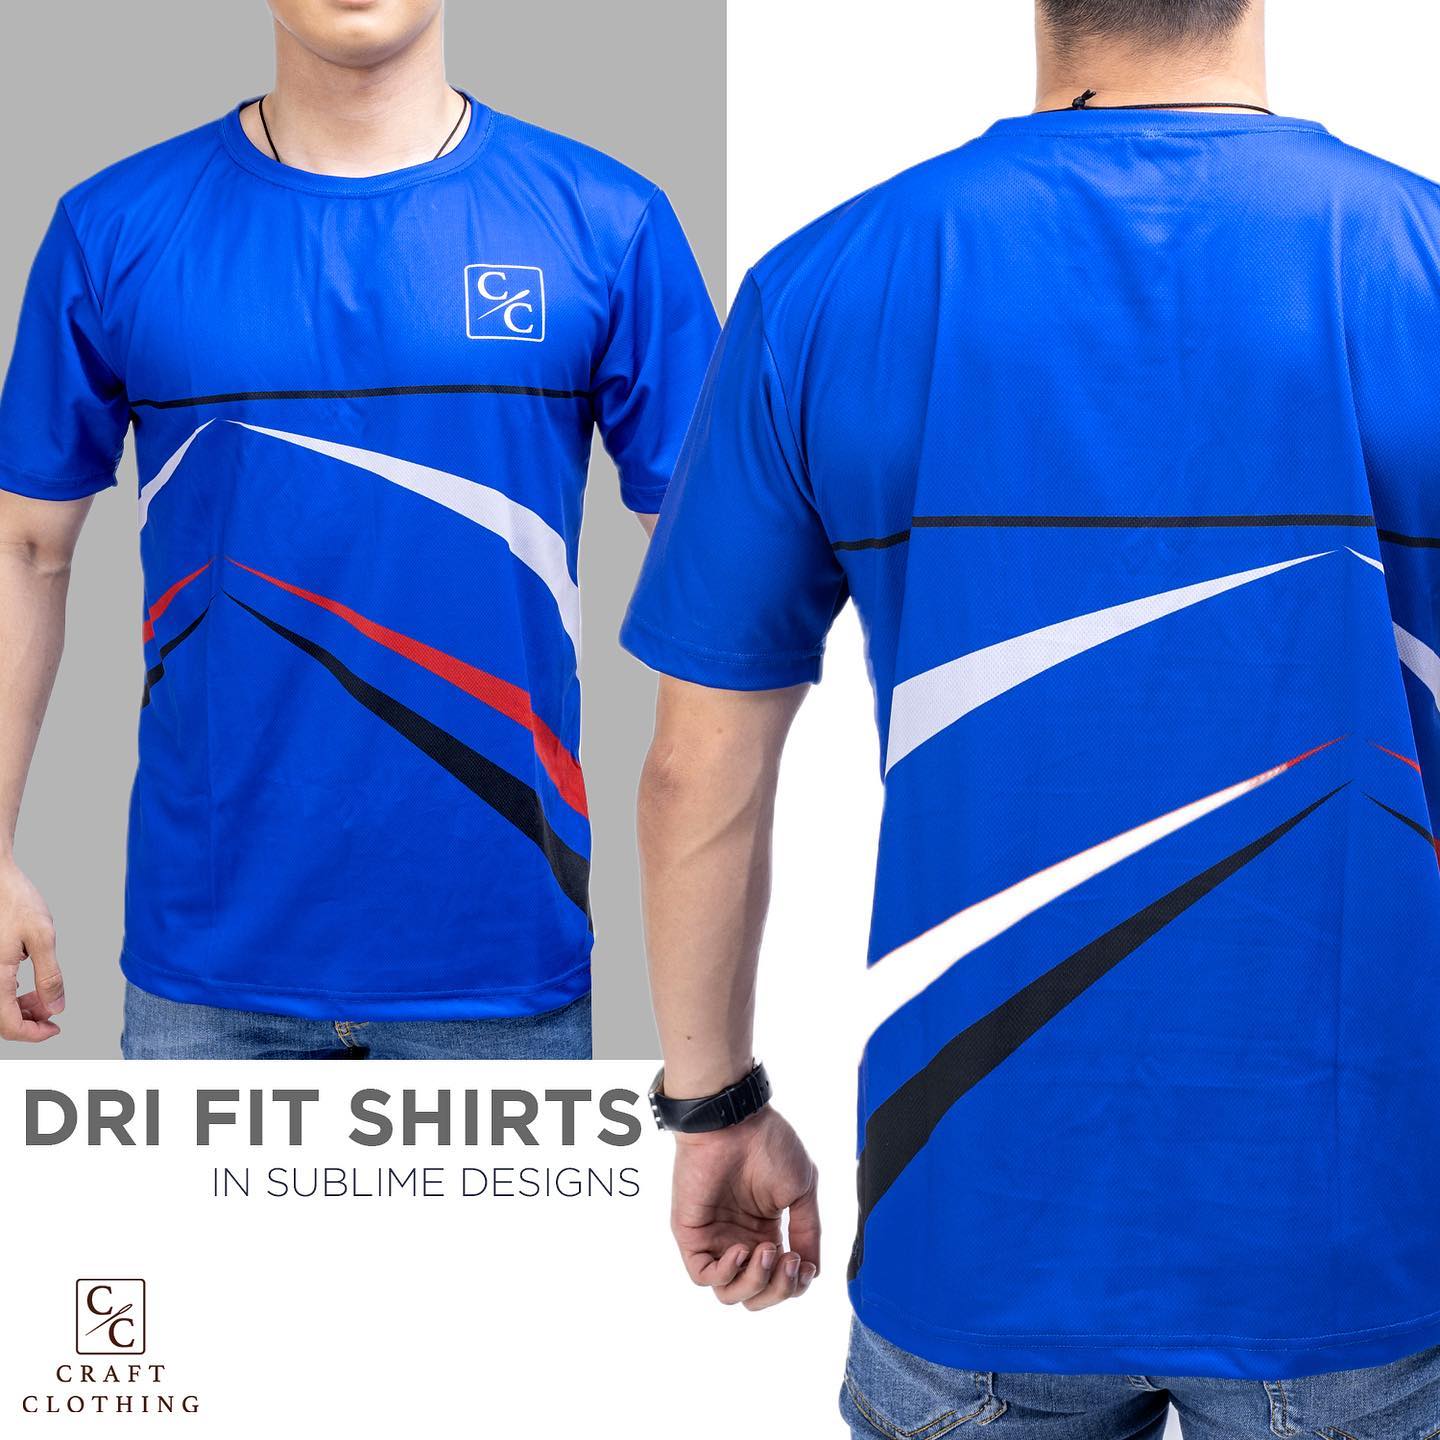 Dri Fit Shirts in Sublime Design